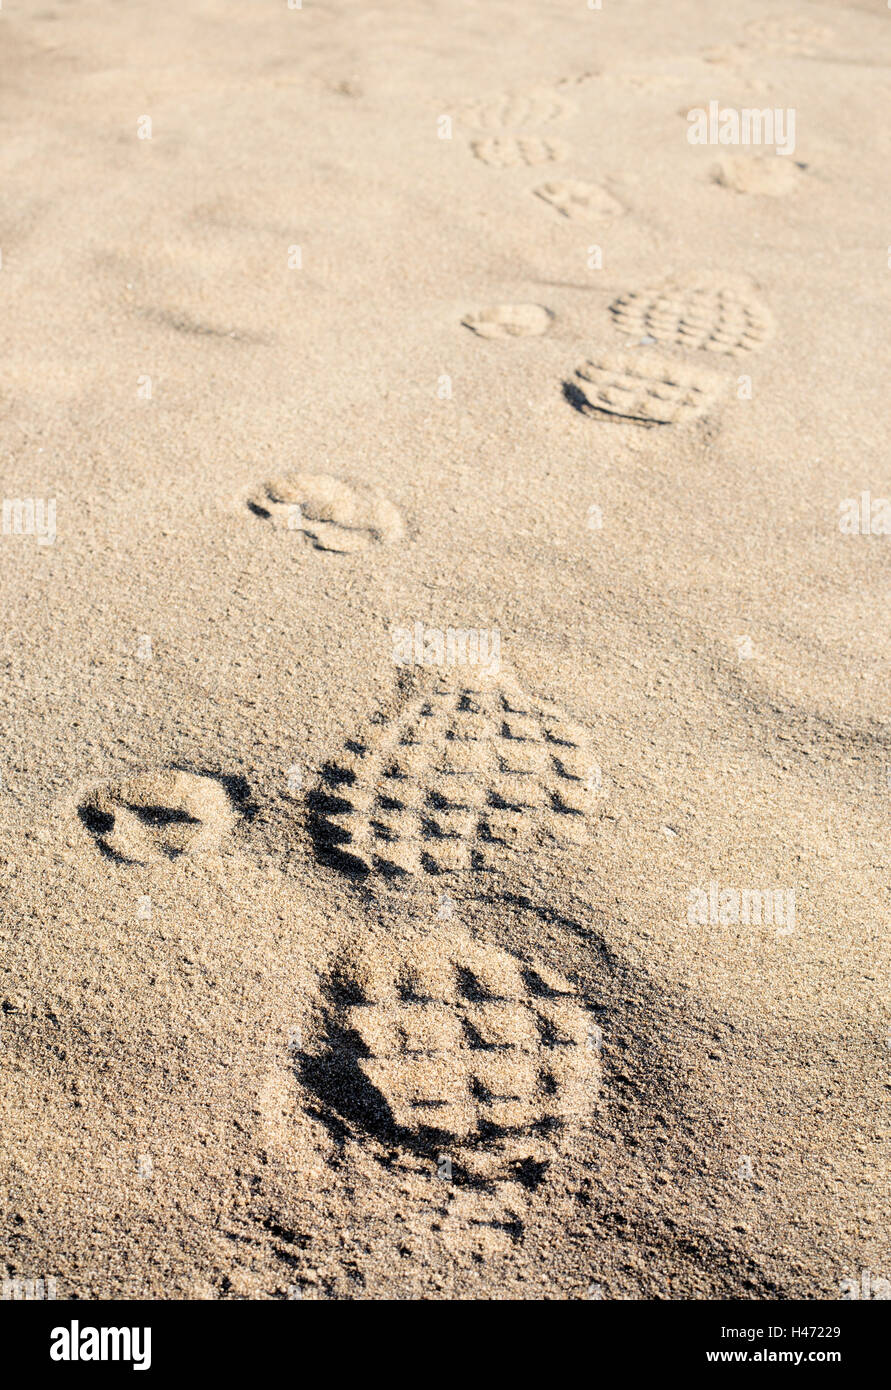 Dog and human footmarks on sand. Stock Photo